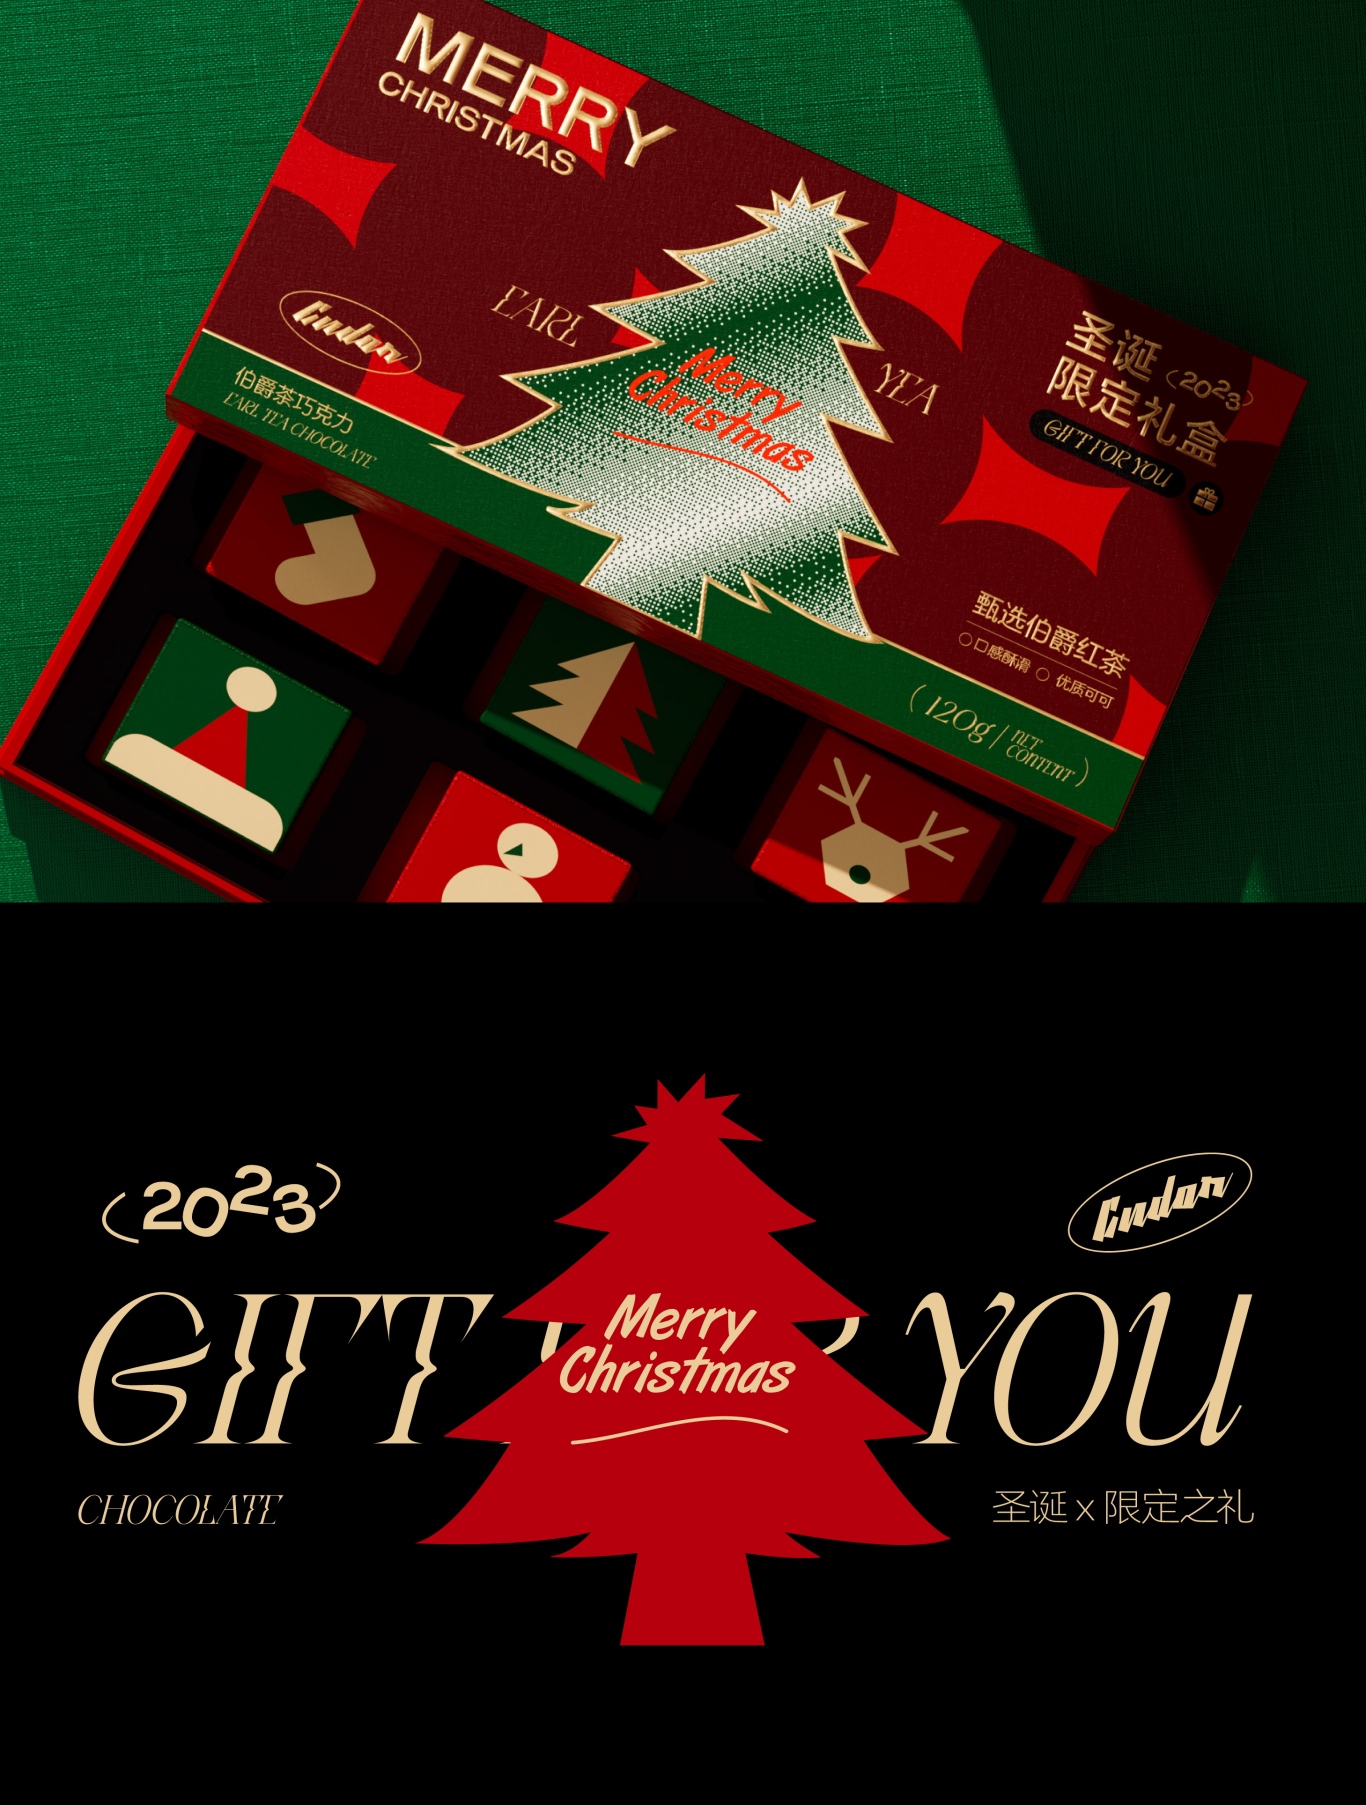 CNDOR X 冬日圣誕之禮丨巧克力禮盒包裝設計圖8